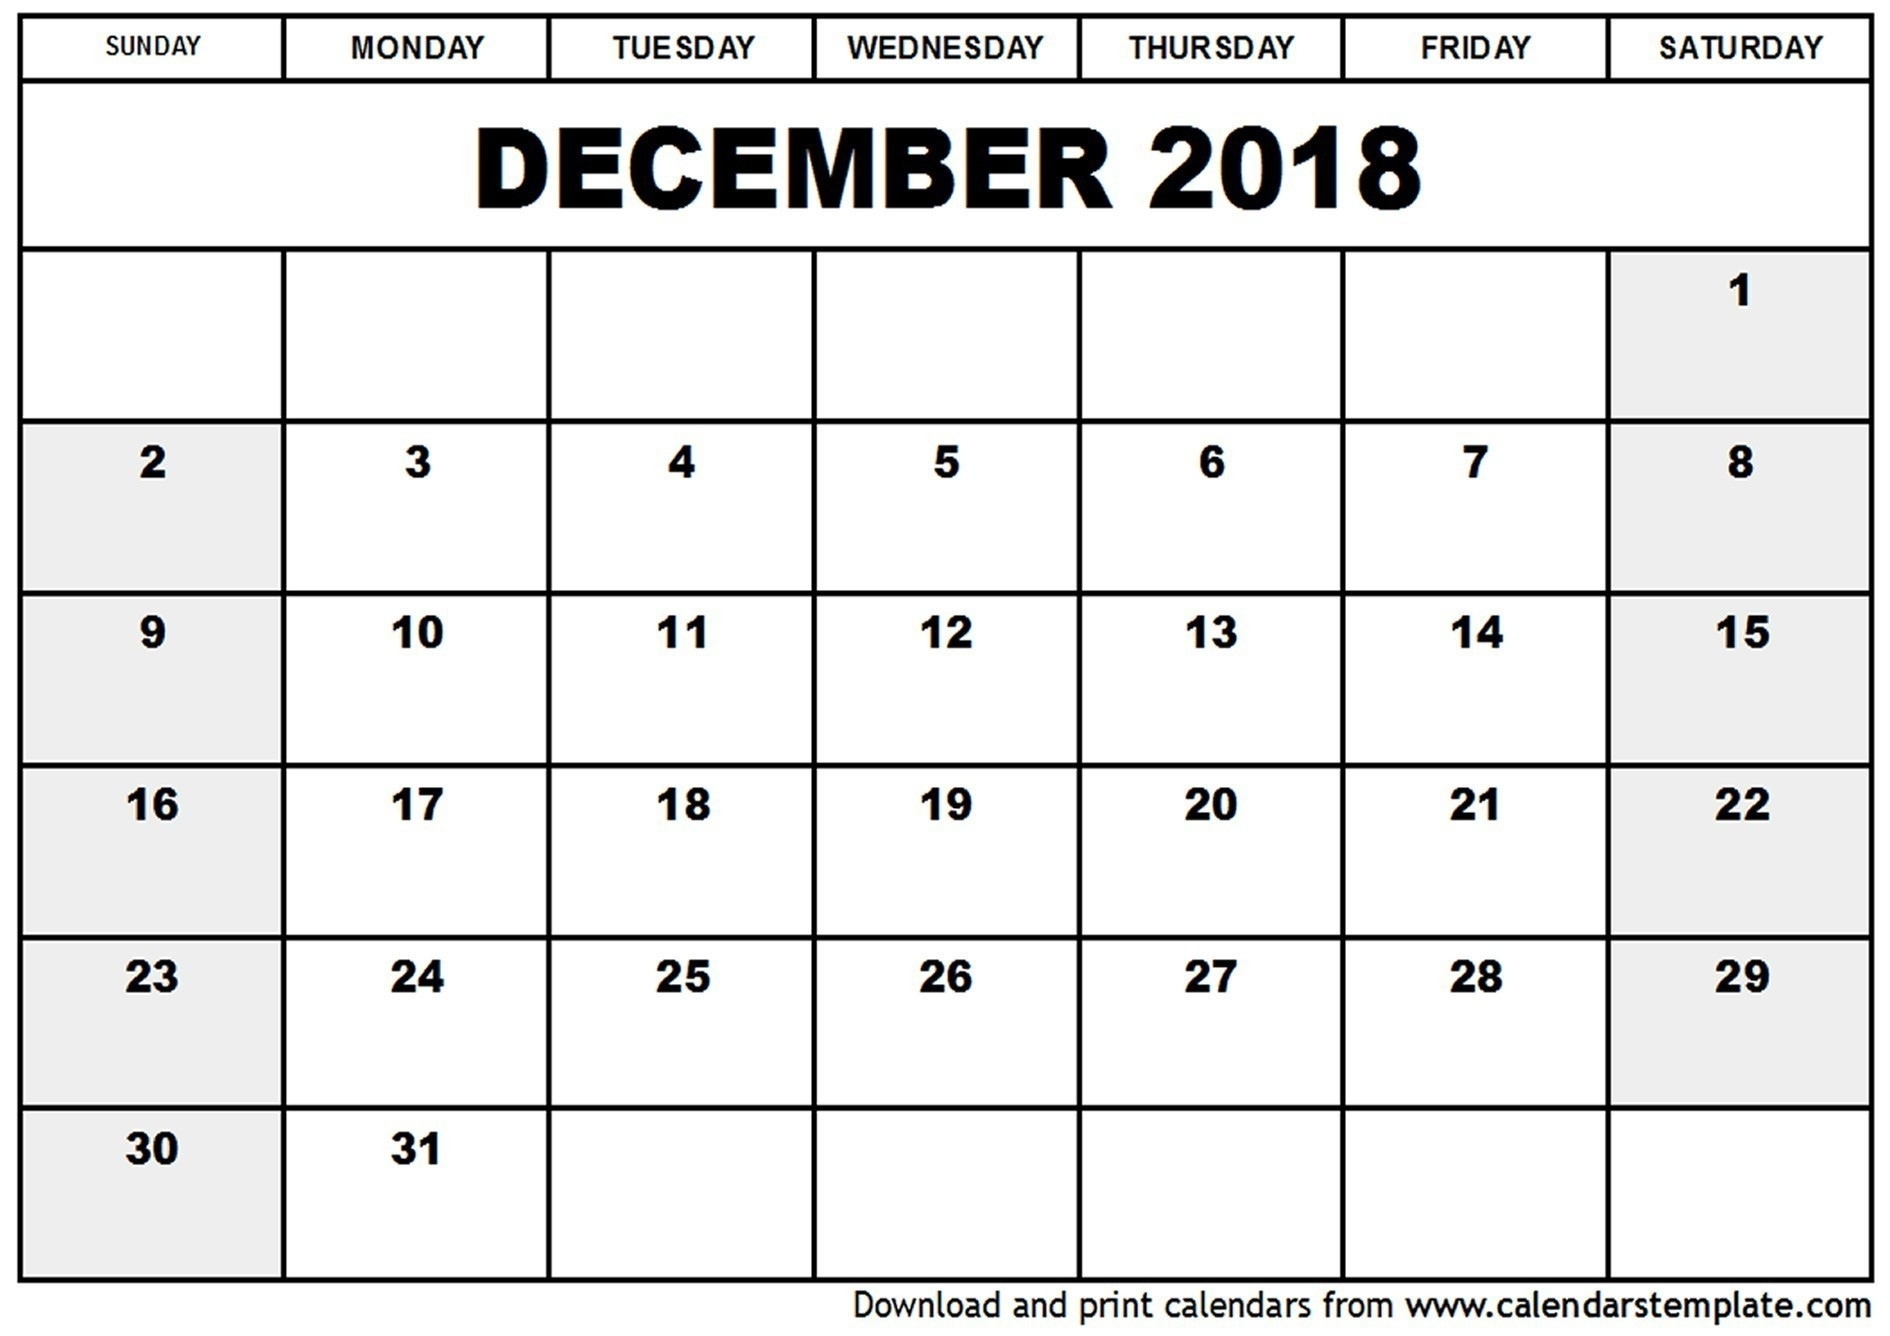 8-x-11-monthly-calendar-printable-blank-calendar-template